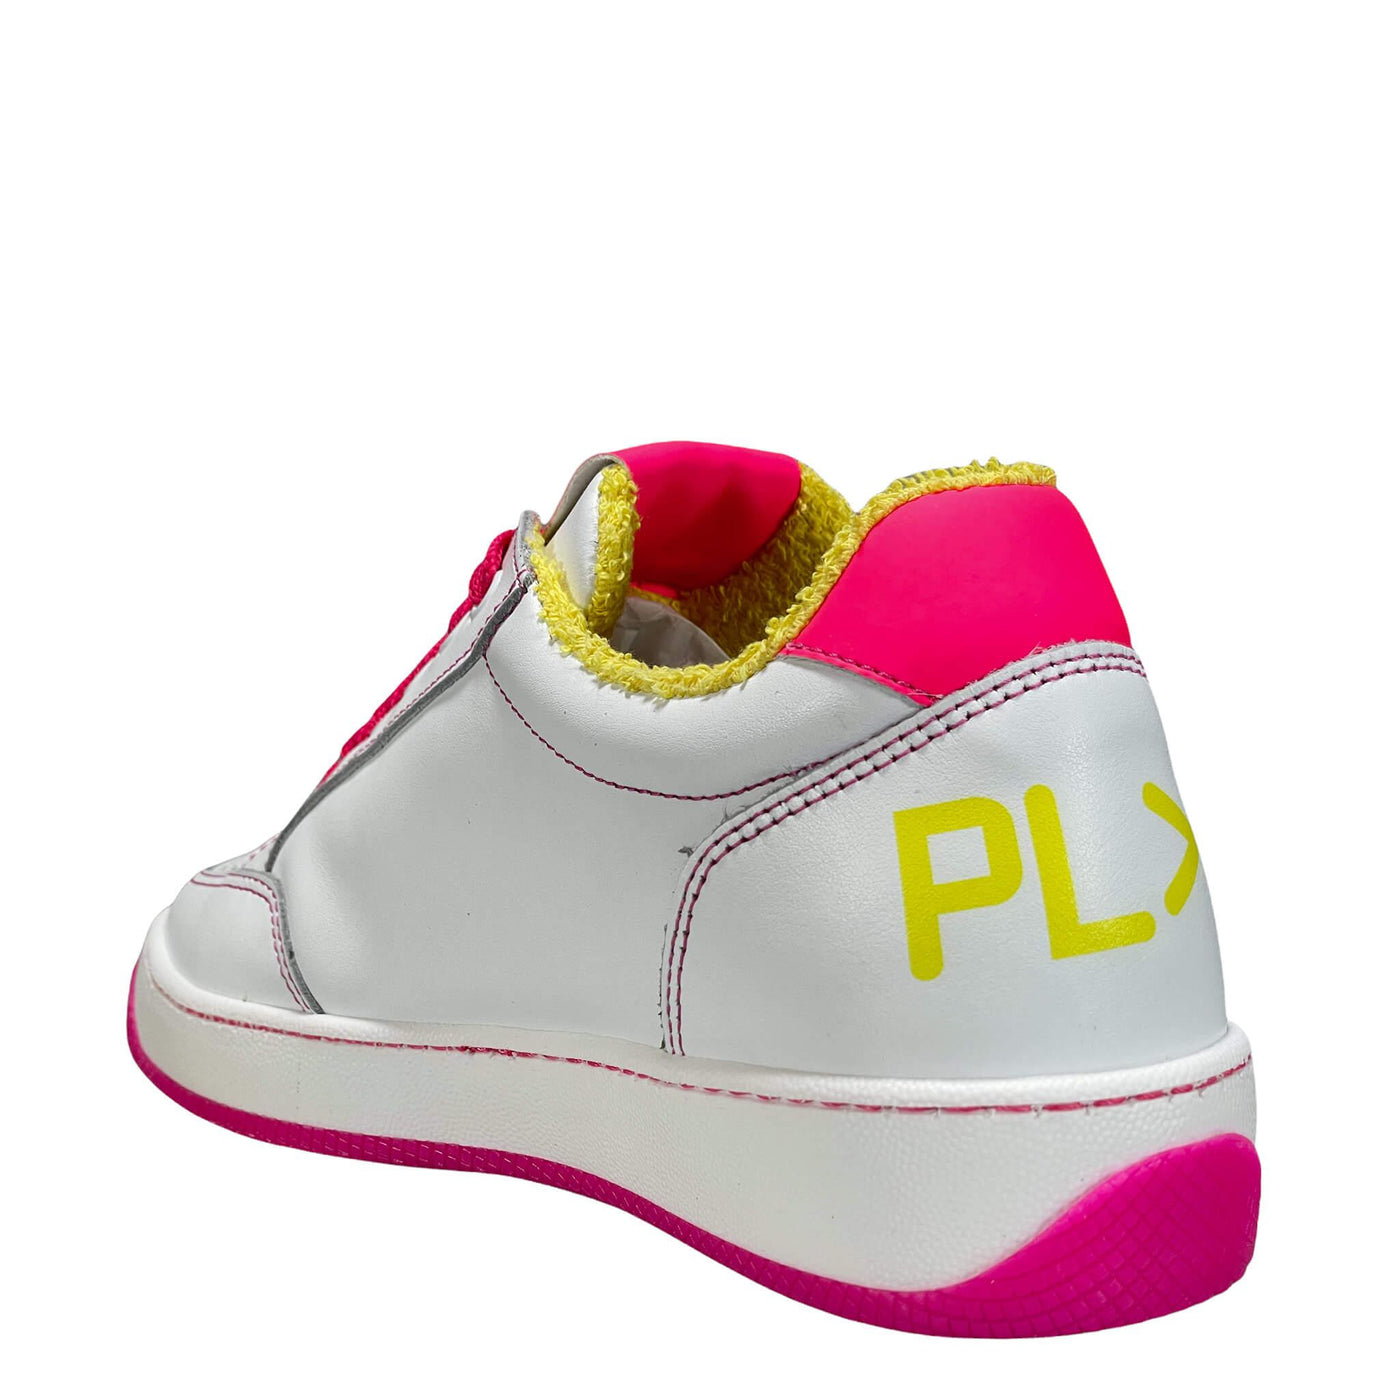 off Play Sneakers, Como 1lh02sp13, , Bianco Fucsia, Bassiniboutique.it, 2022 p/e